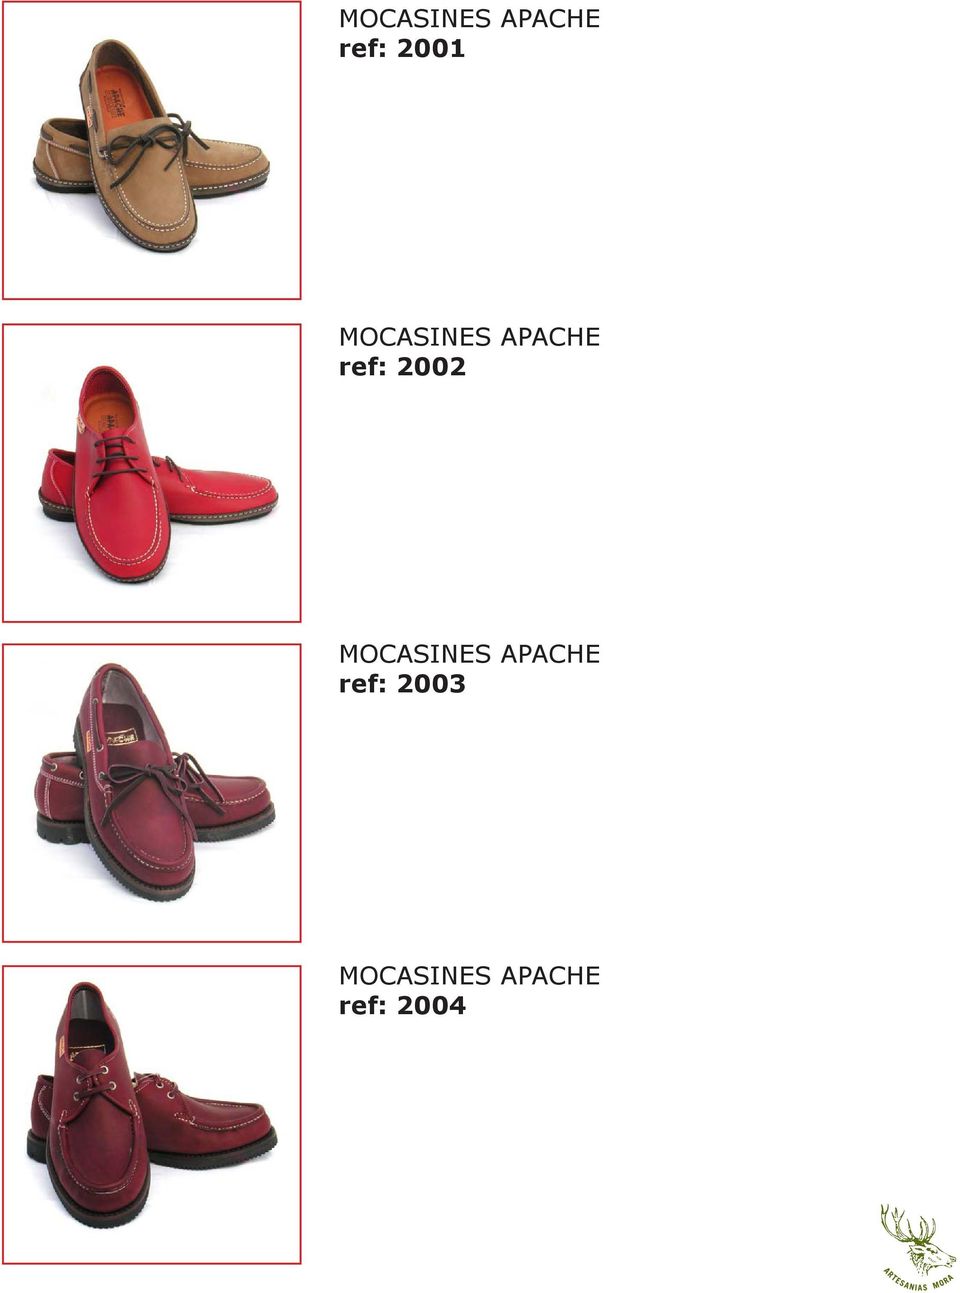 MOCASINES APACHE ref: 2003